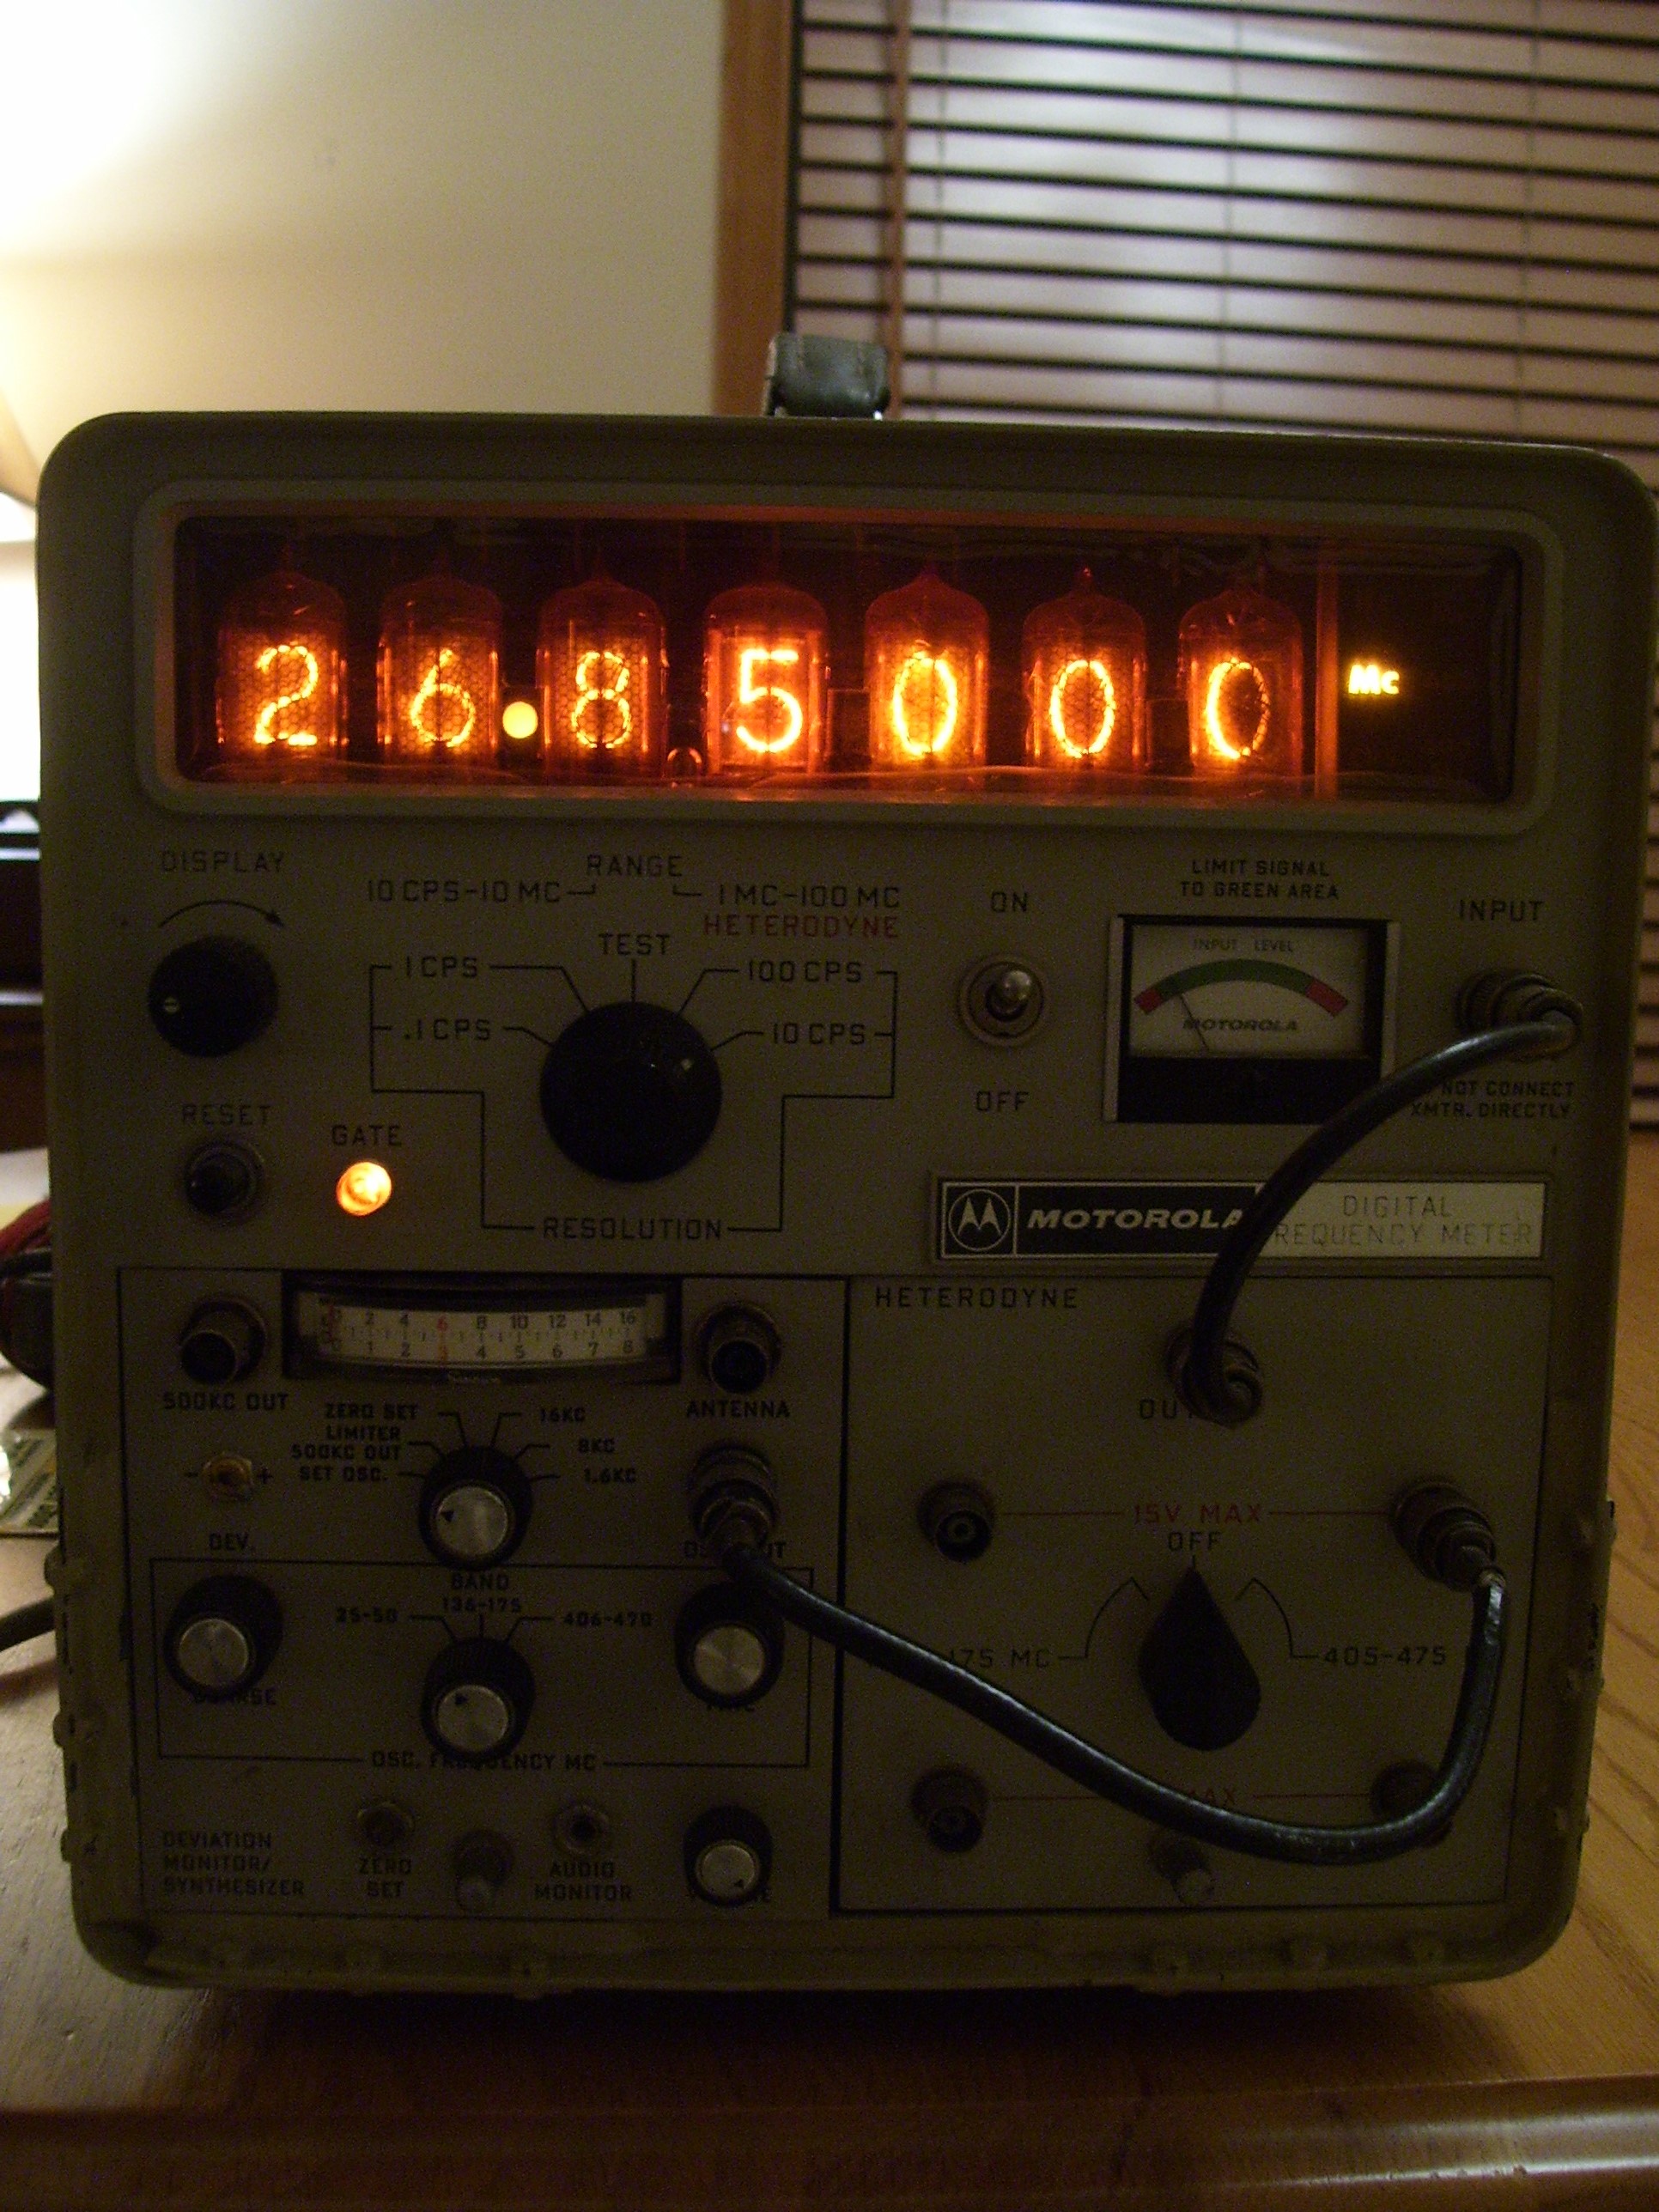 digitalmeter.JPG